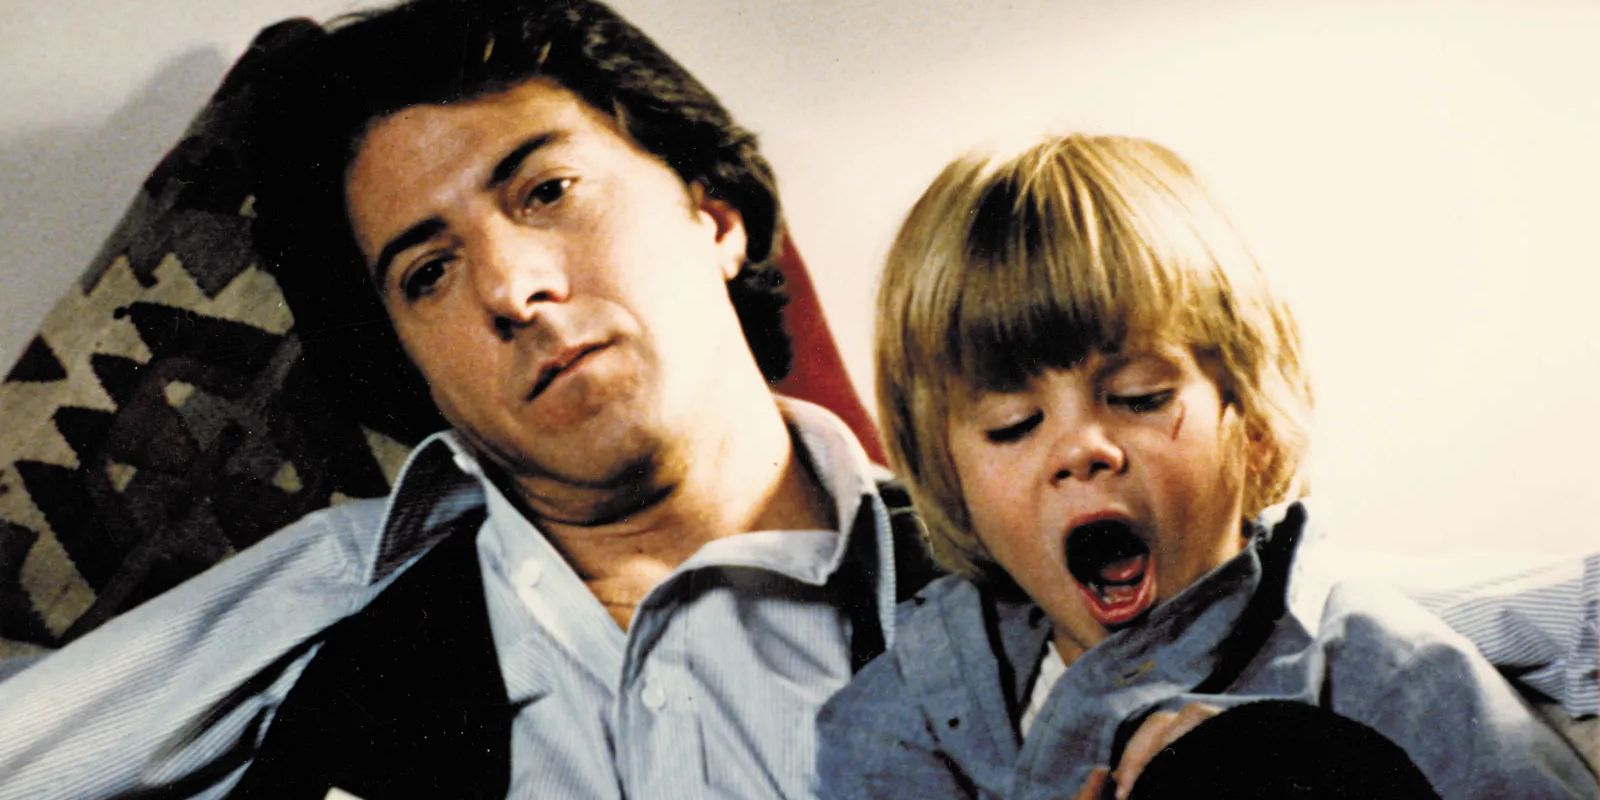 Ted Kramer (Dustin Hoffman) looks bored while Billy (Justin Henry) yawns in his lap in Kramer vs. Kramer